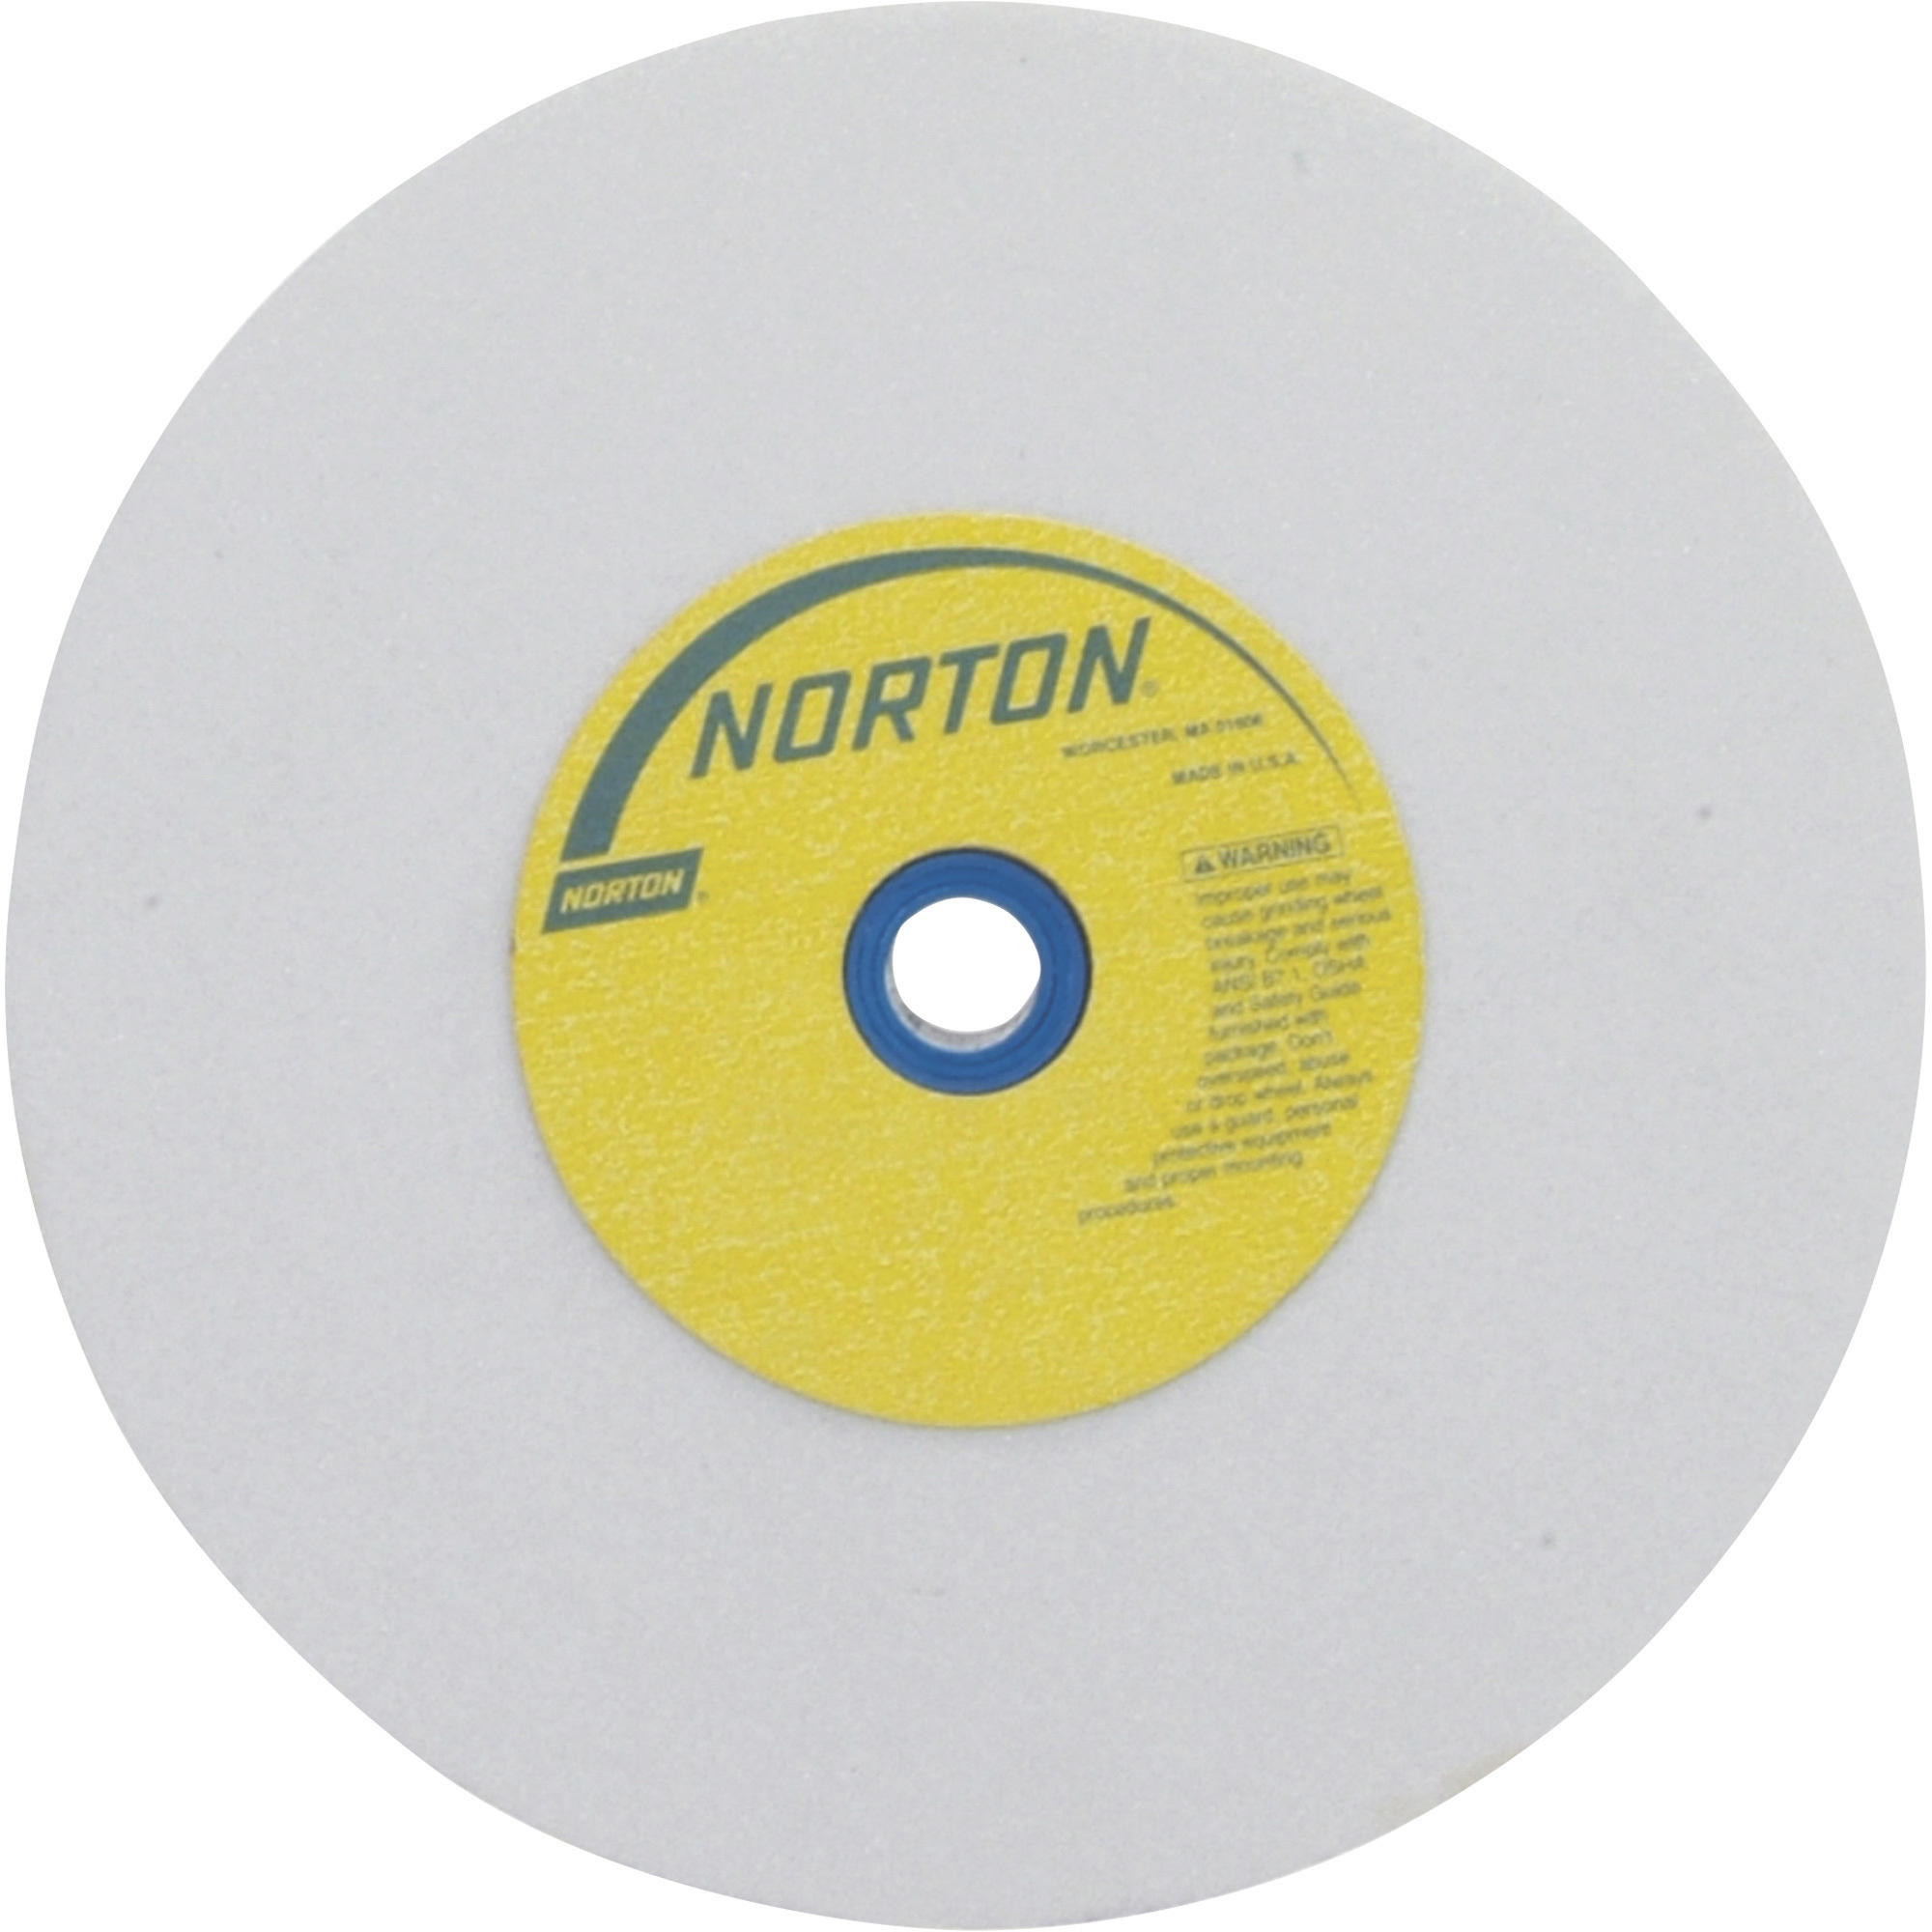 Norton Grinding Wheel, 6Inch x 1Inch, White Aluminum Oxide, 150 Grit